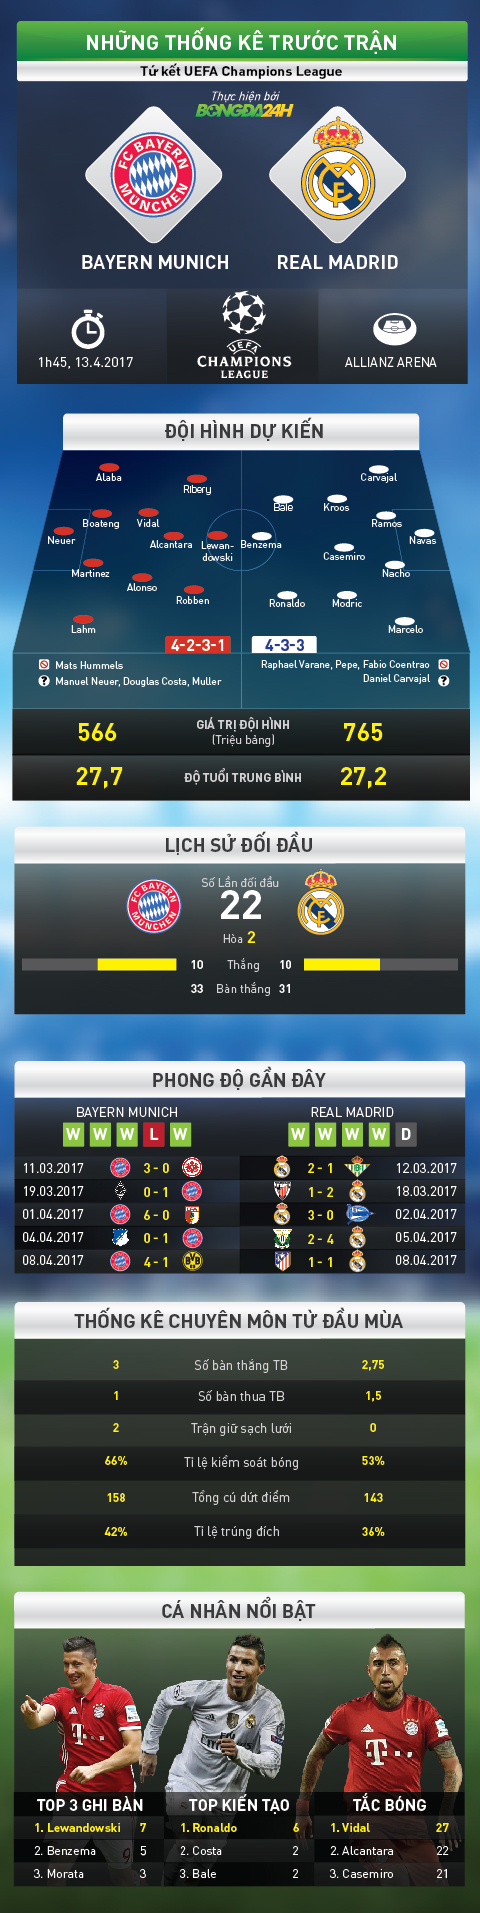 Infographic Bayern Munich vs Real Madrid Sieu kinh dien chau Au hinh anh goc